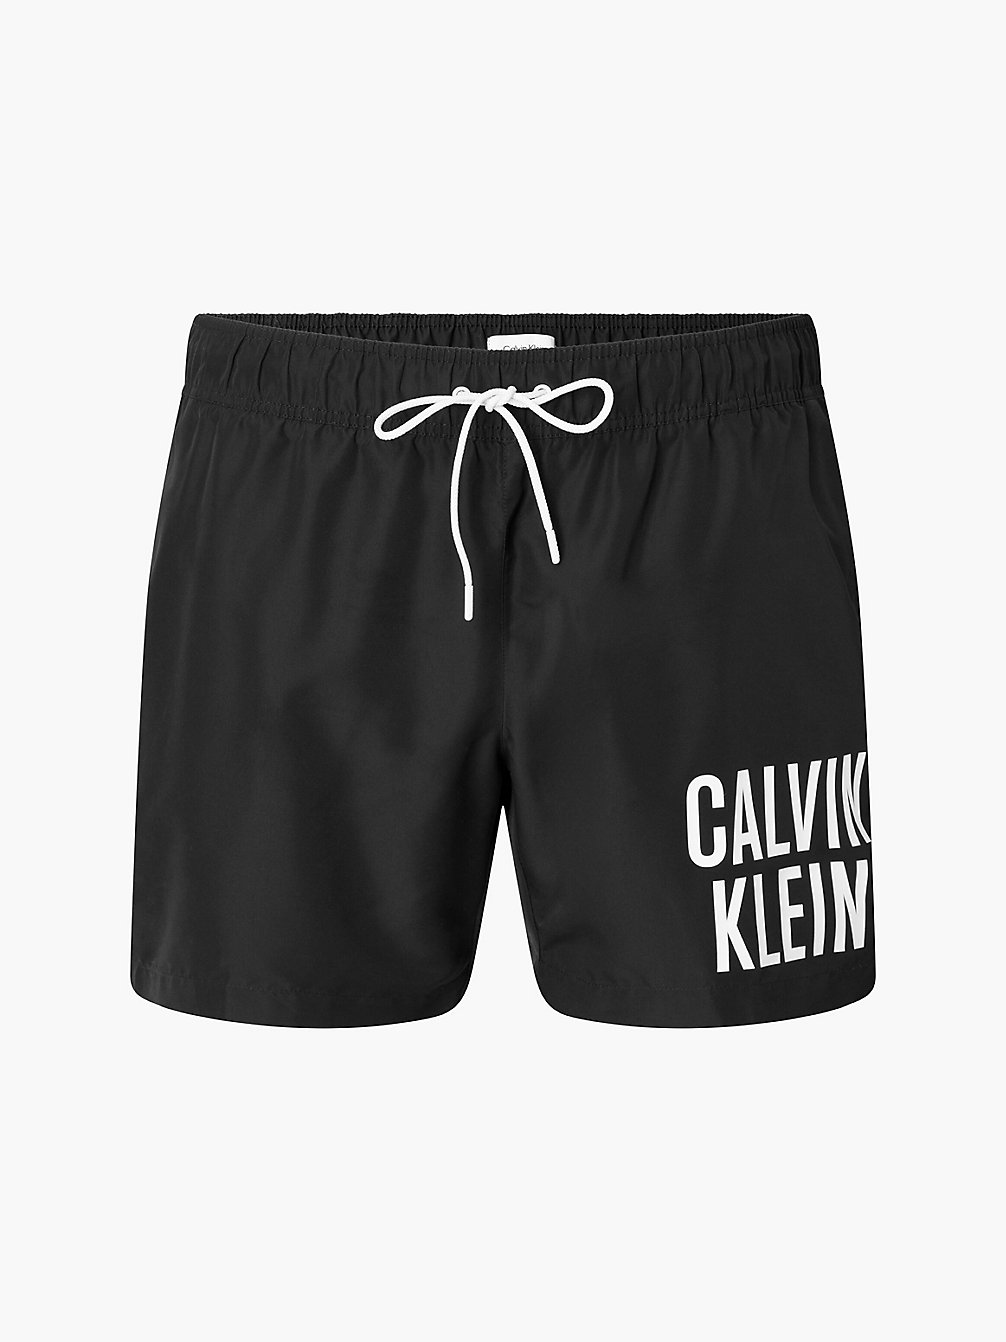 PVH BLACK > Grote Maat Zwemshort Met Trekkoord - Intense Power > undefined heren - Calvin Klein